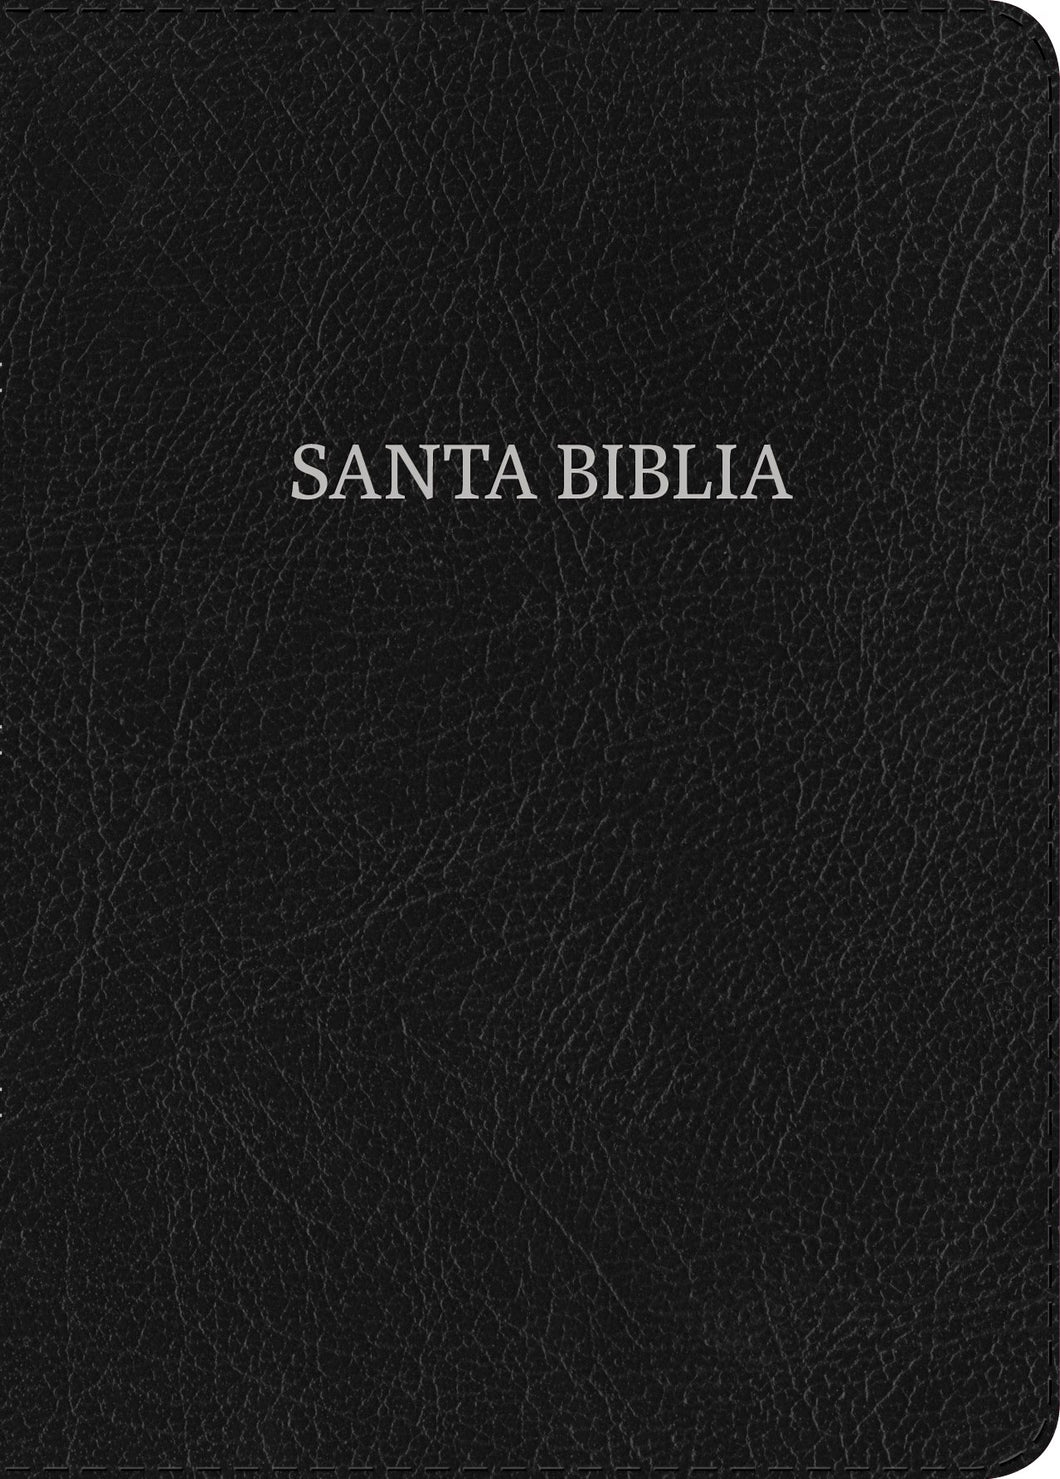 NVI Super Giant Print Reference Bible (Biblia Letra Super Gigante)-Black Bonded Leather Indexed